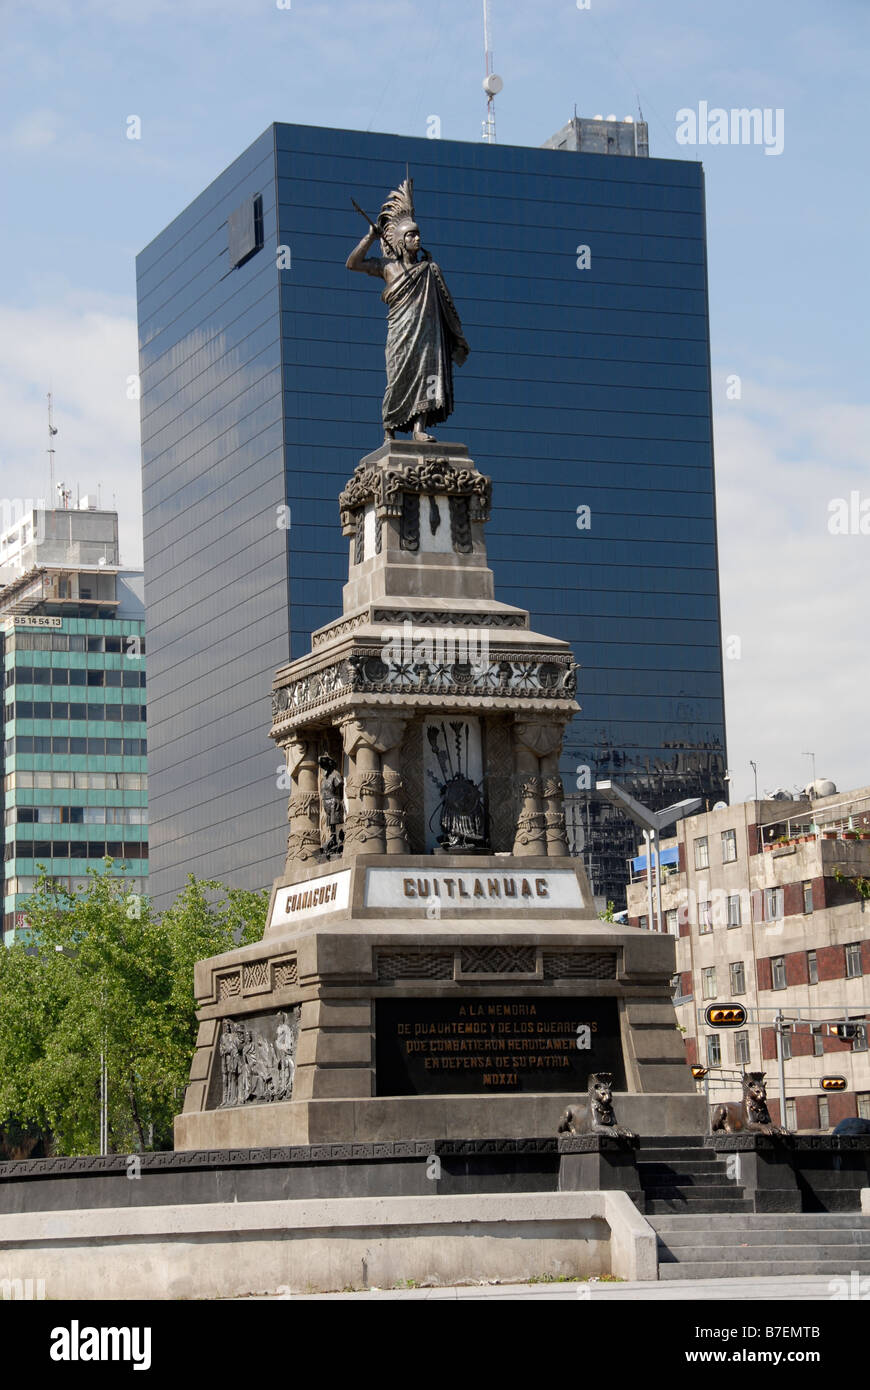 Statue of Cuauhtemoc, Mexico city Stock Photo